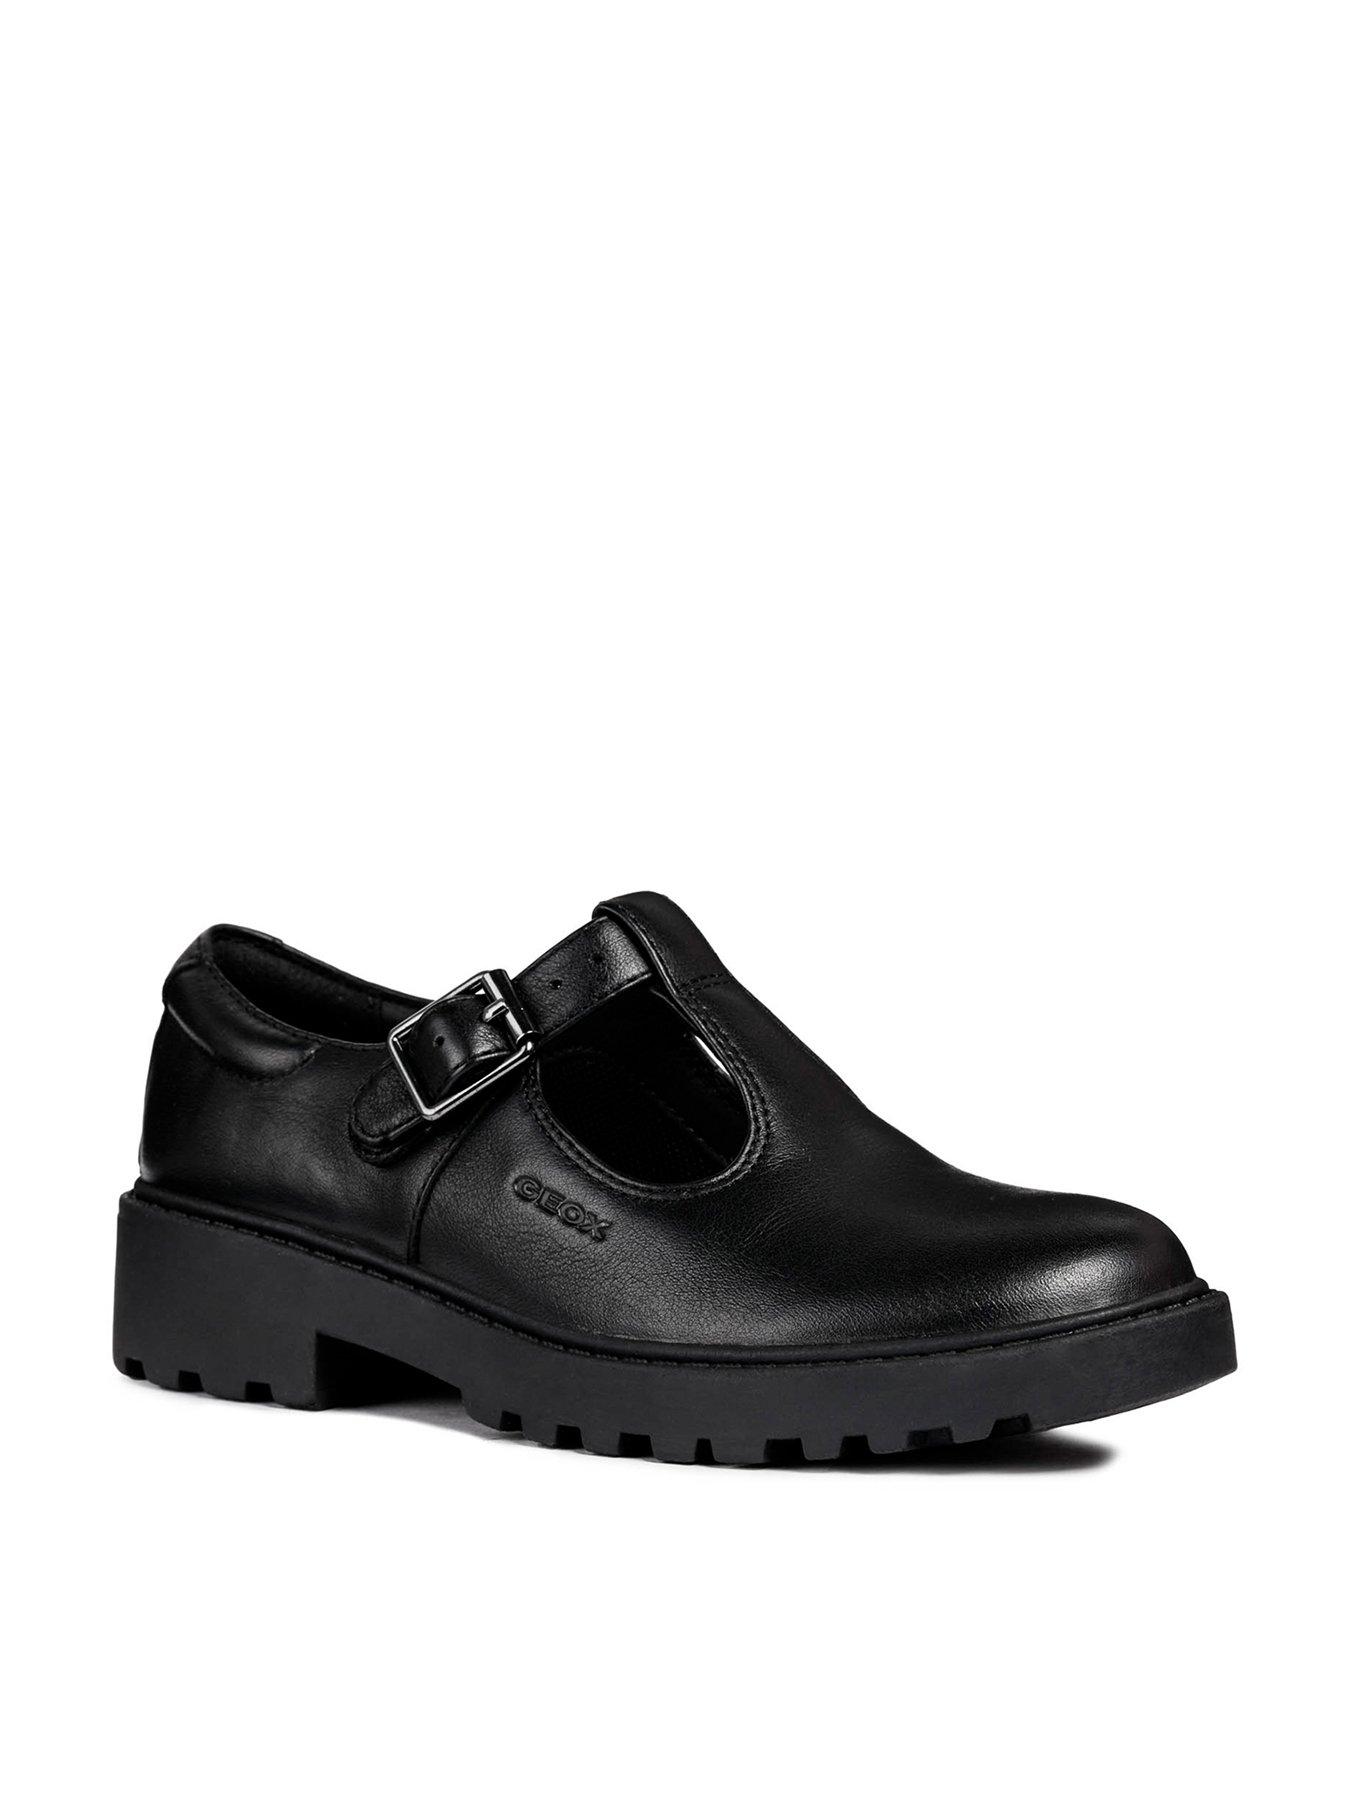 Geox Casey Leather School Shoes - Black | Very Ireland